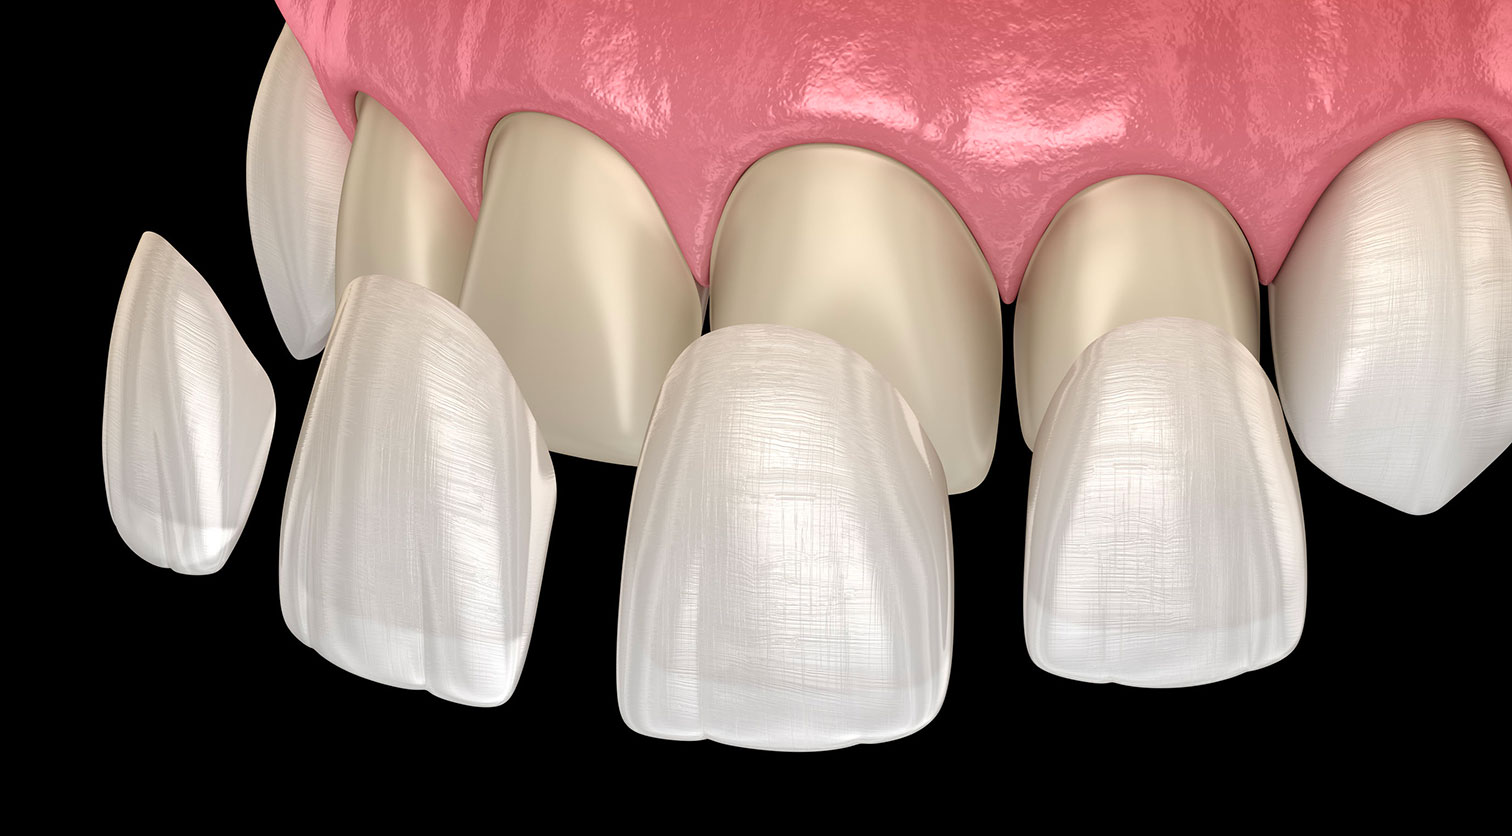 Lancy Dental Centre - Carillas Dentales